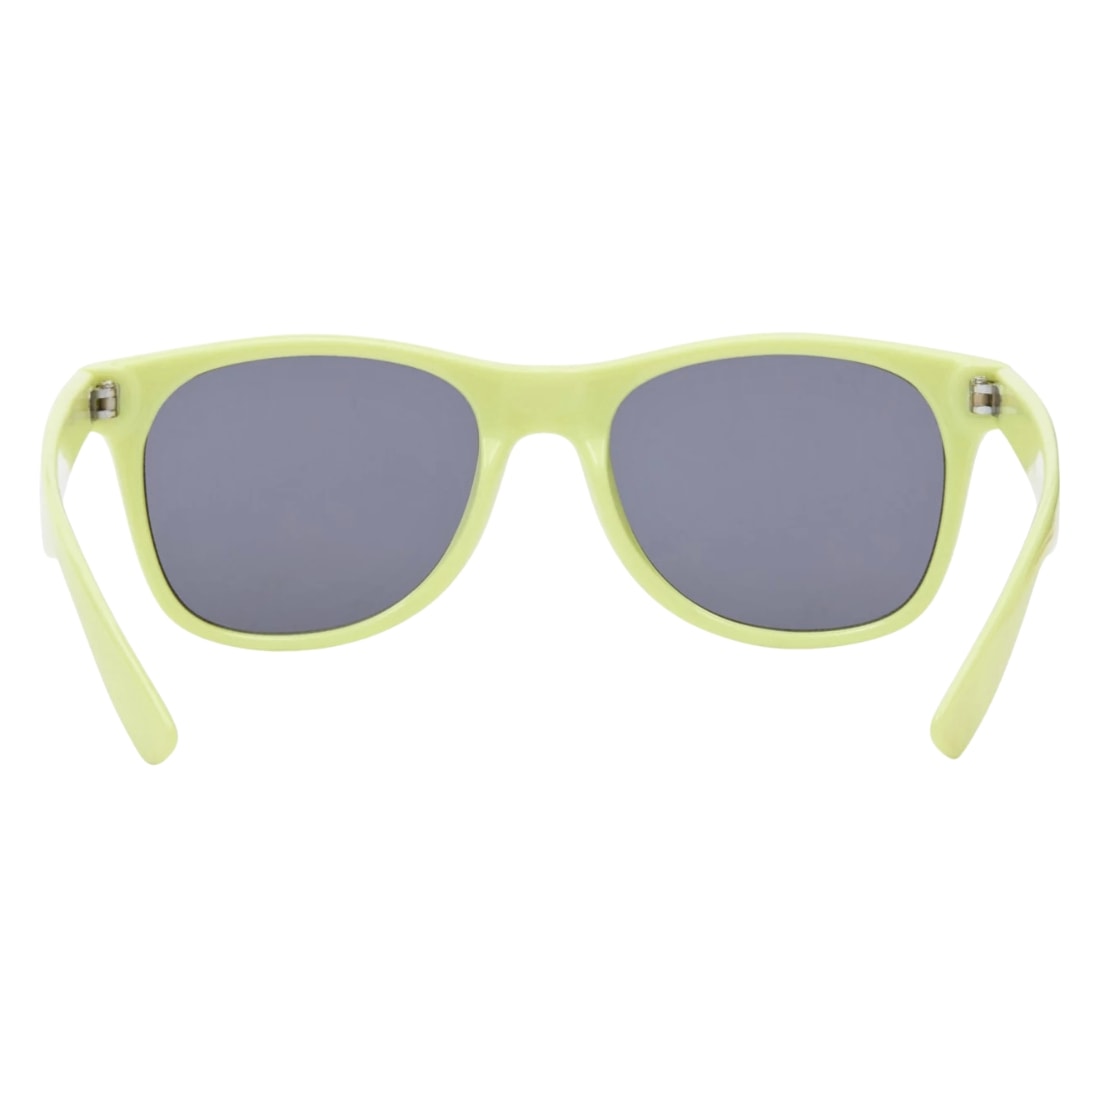 Vans Spicoli 4 Shades Sunglasses - Sunny Lime - Square/Rectangular Sunglasses by Vans